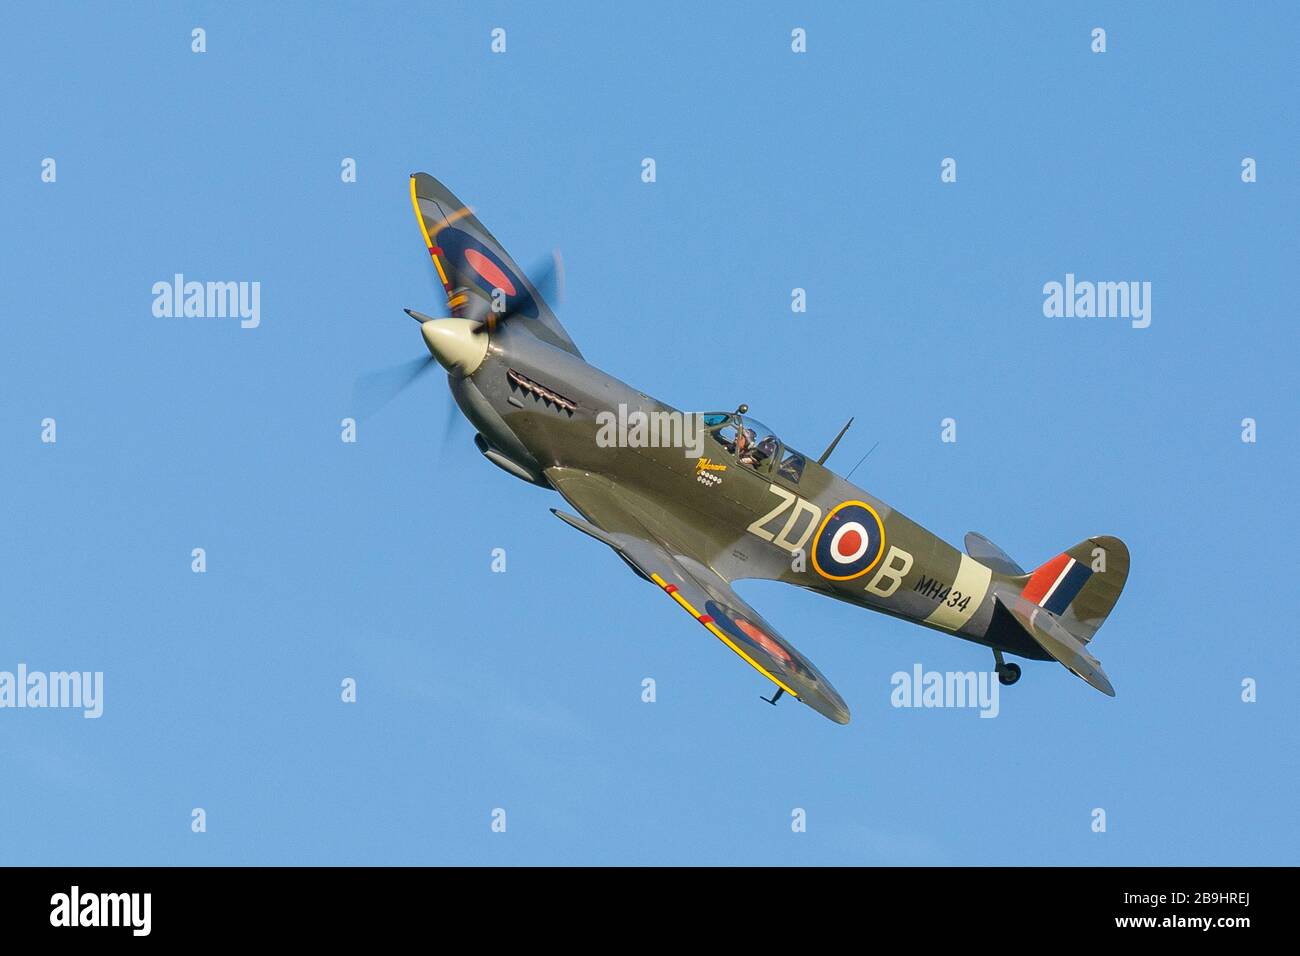 1943 Spitfire Mk IX, Goodwood Revival 2018, West Sussex UK Stockfoto